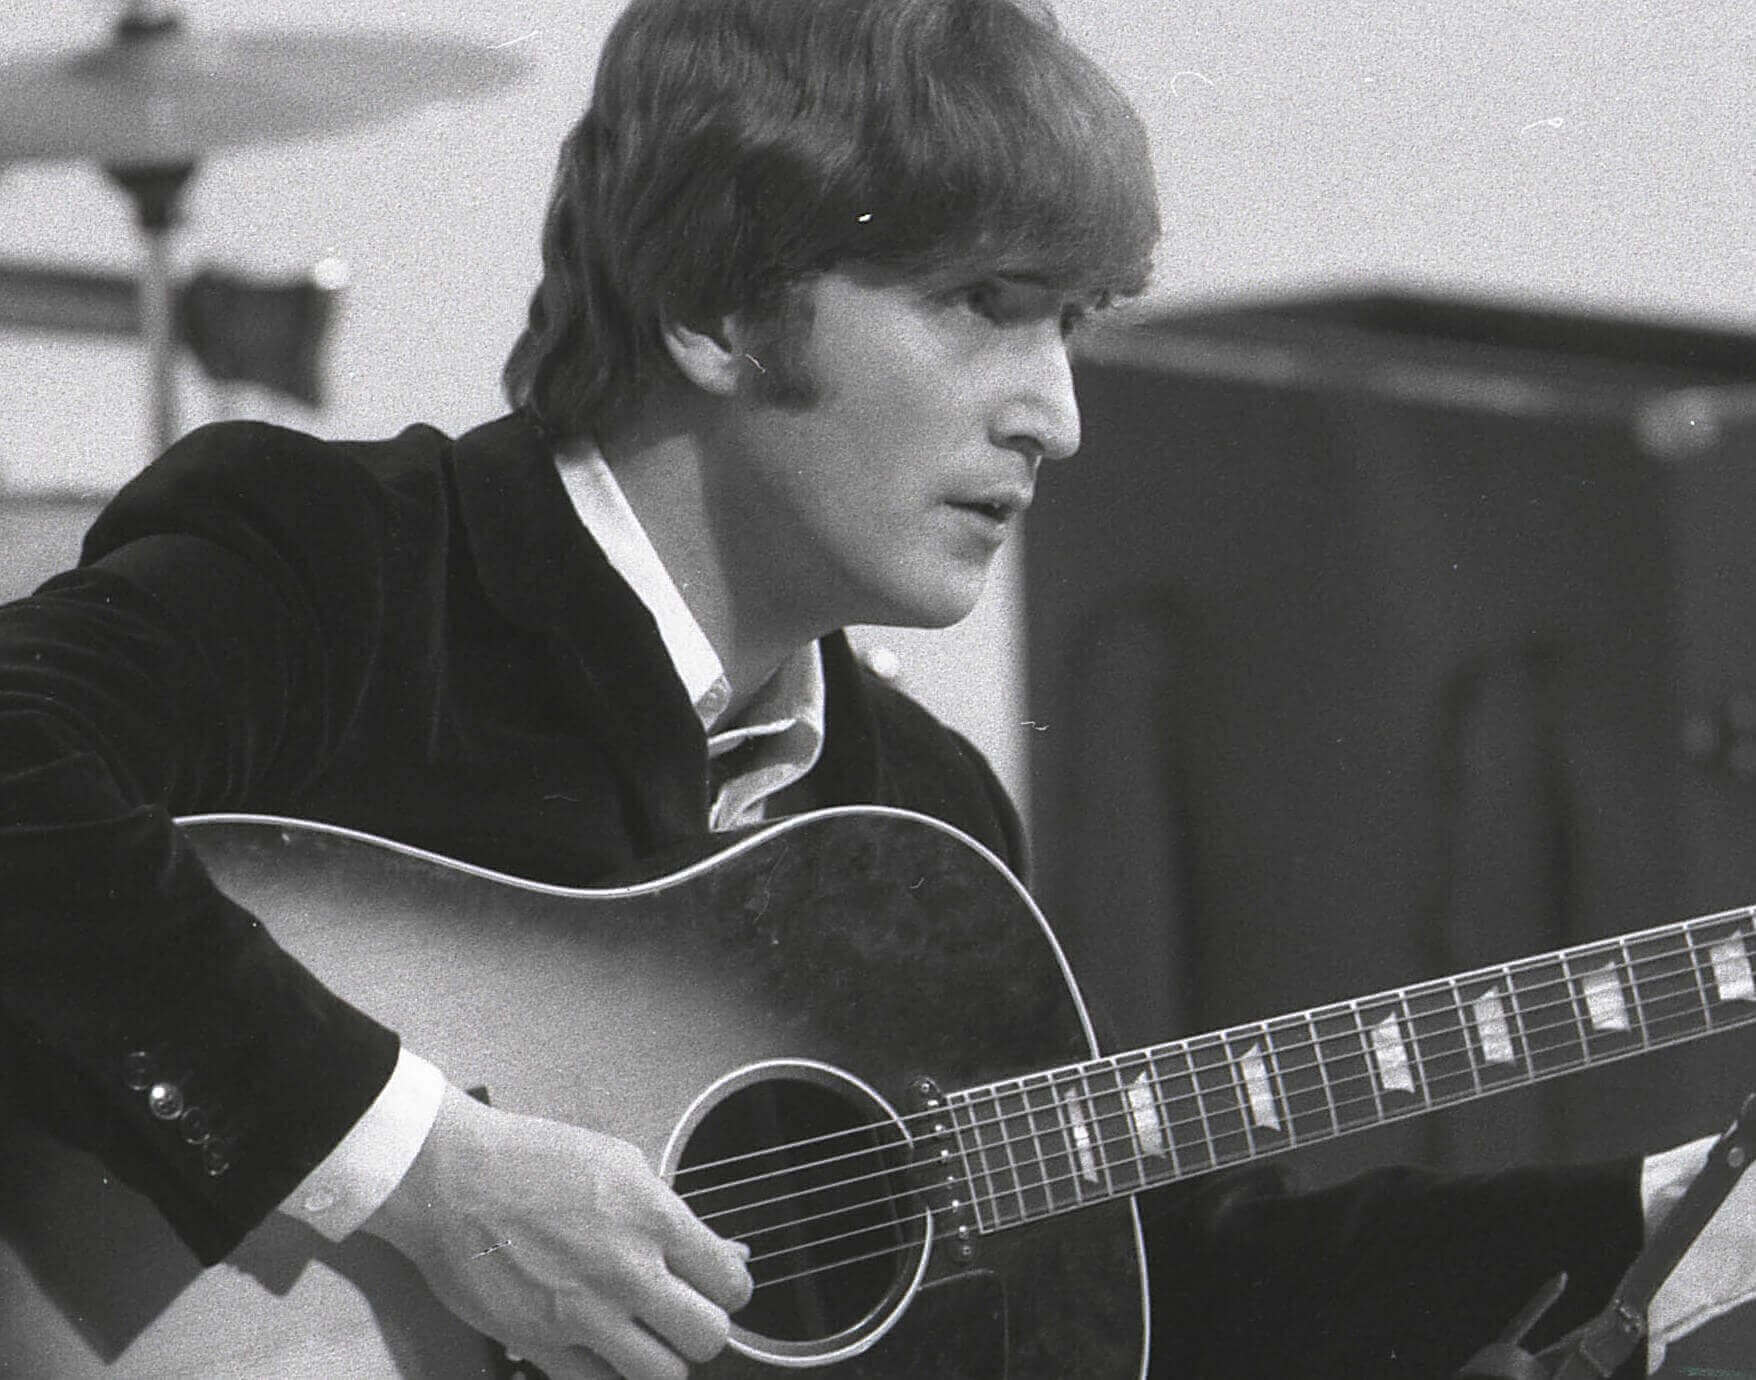 "Mind Games" singer John Lennon with a guitar